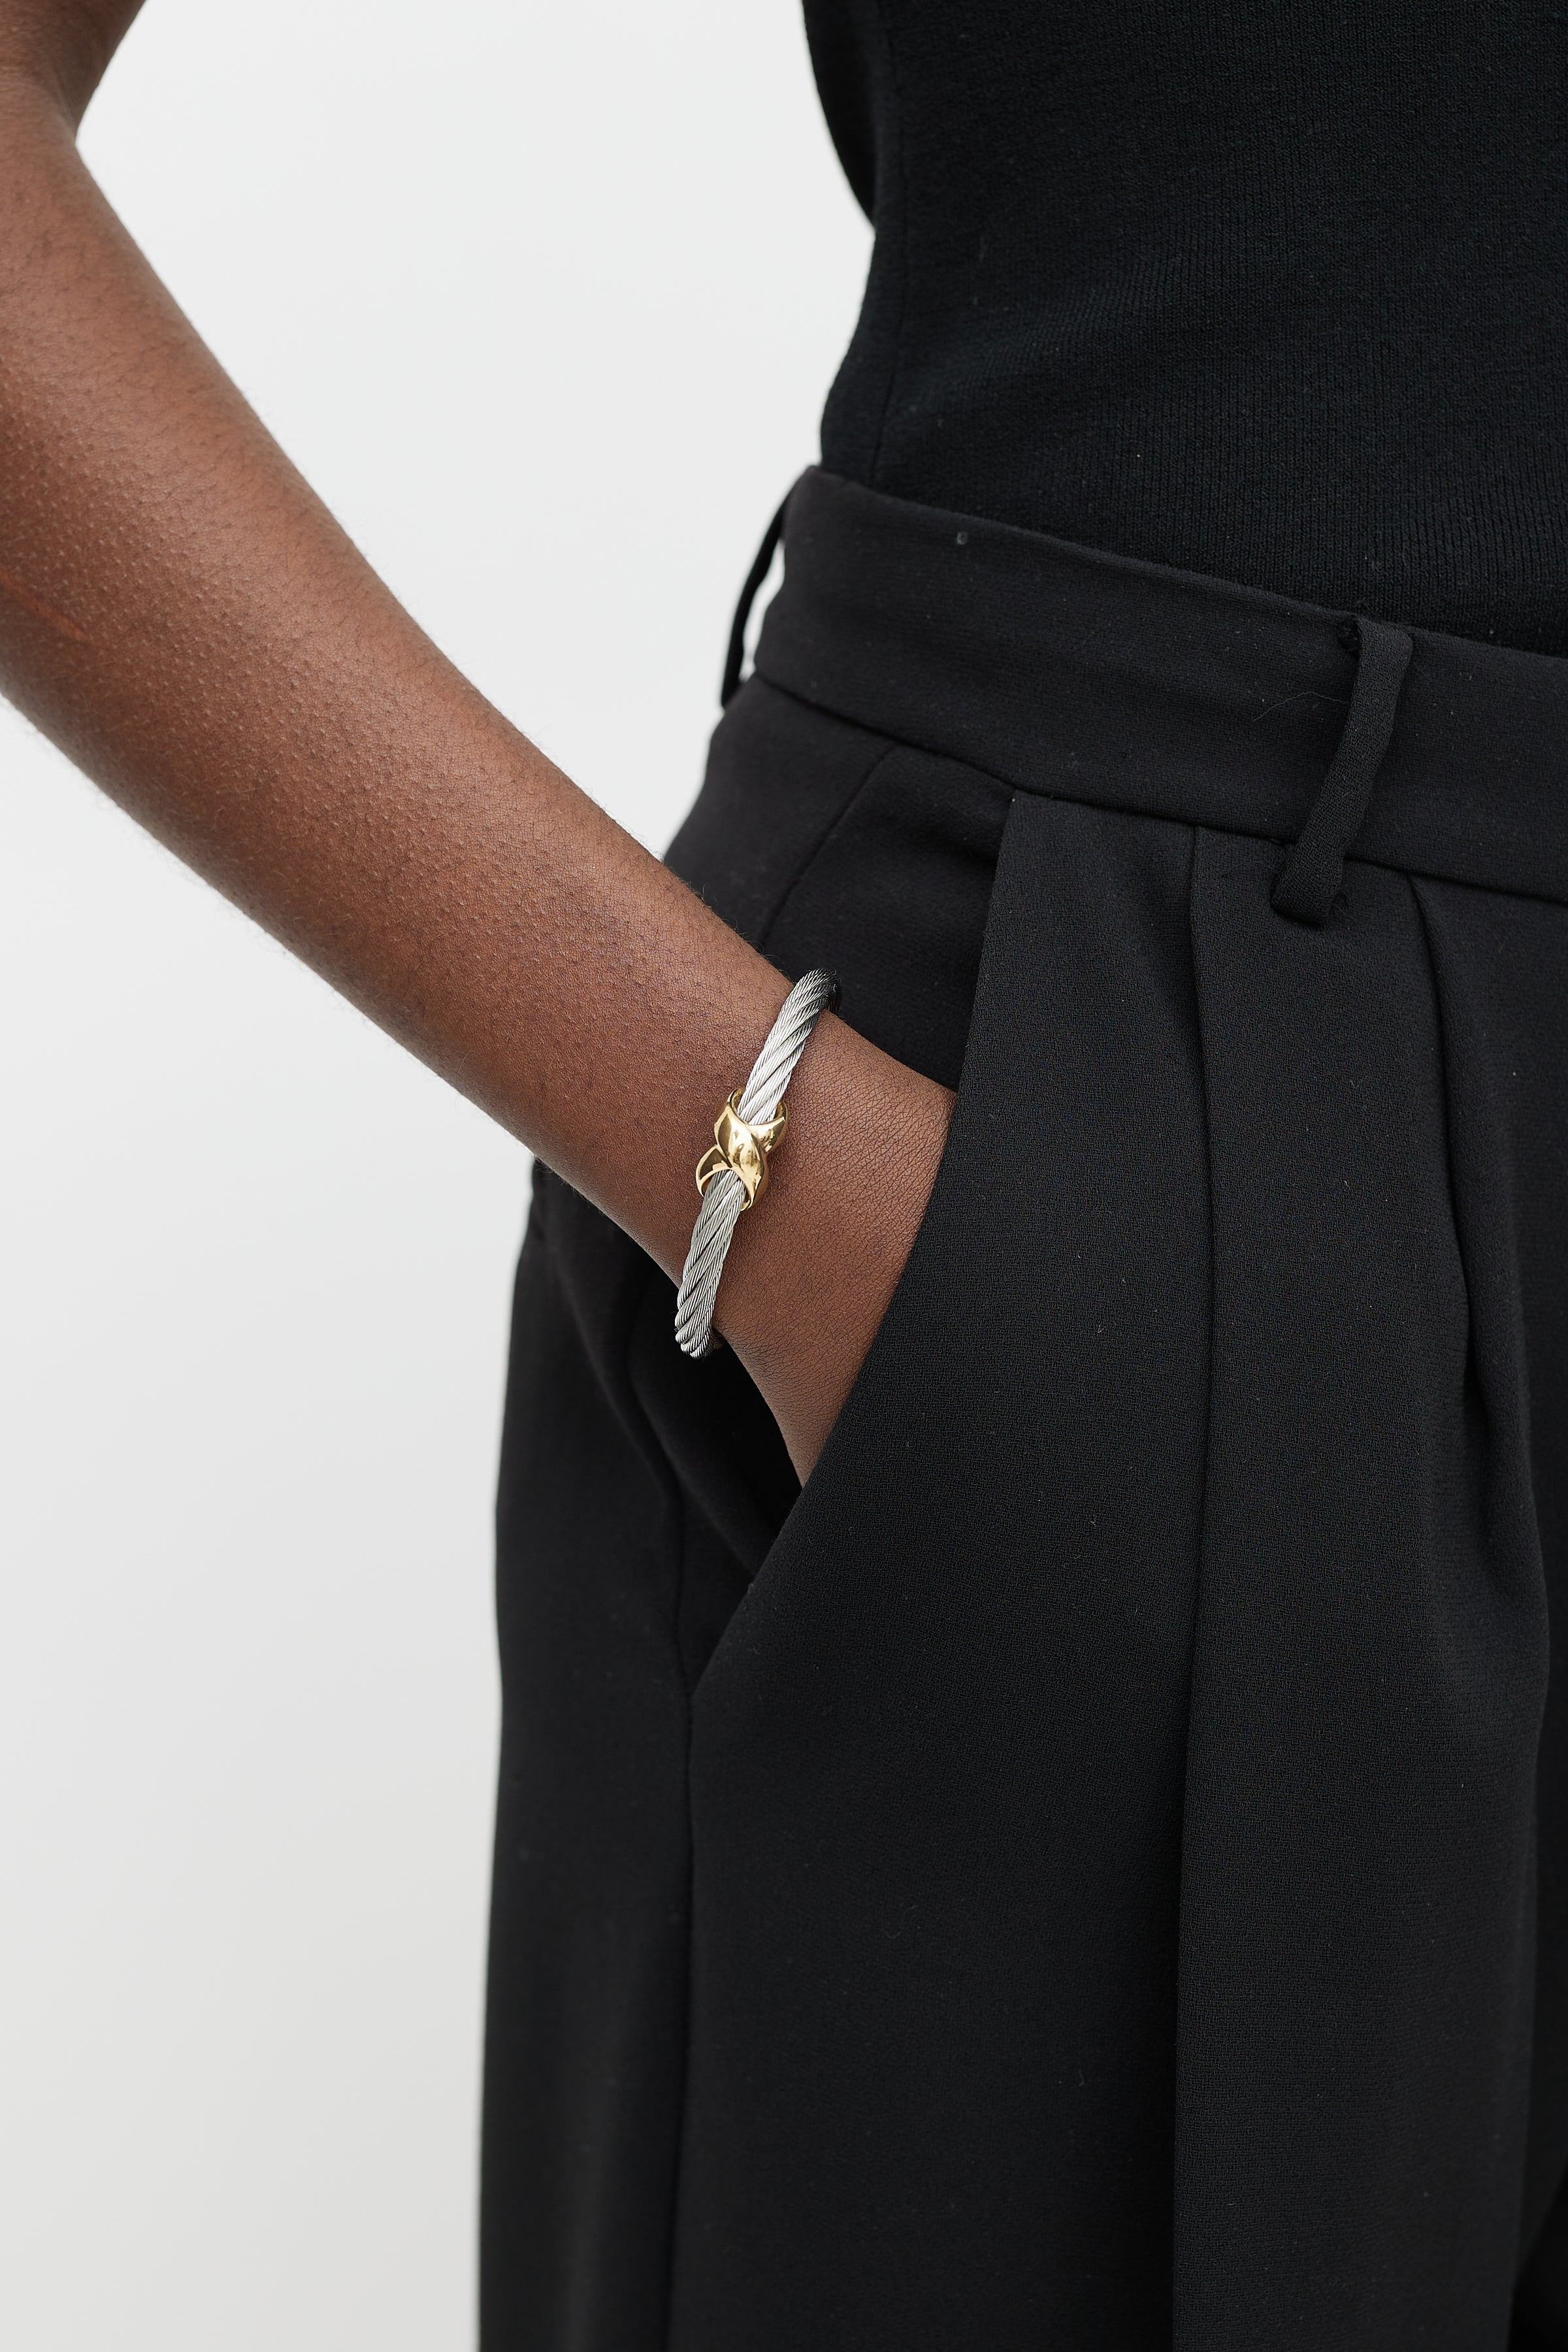 David Yurman Cable Bracelet with Black Onyx and Diamonds, 7mm | REEDS  Jewelers